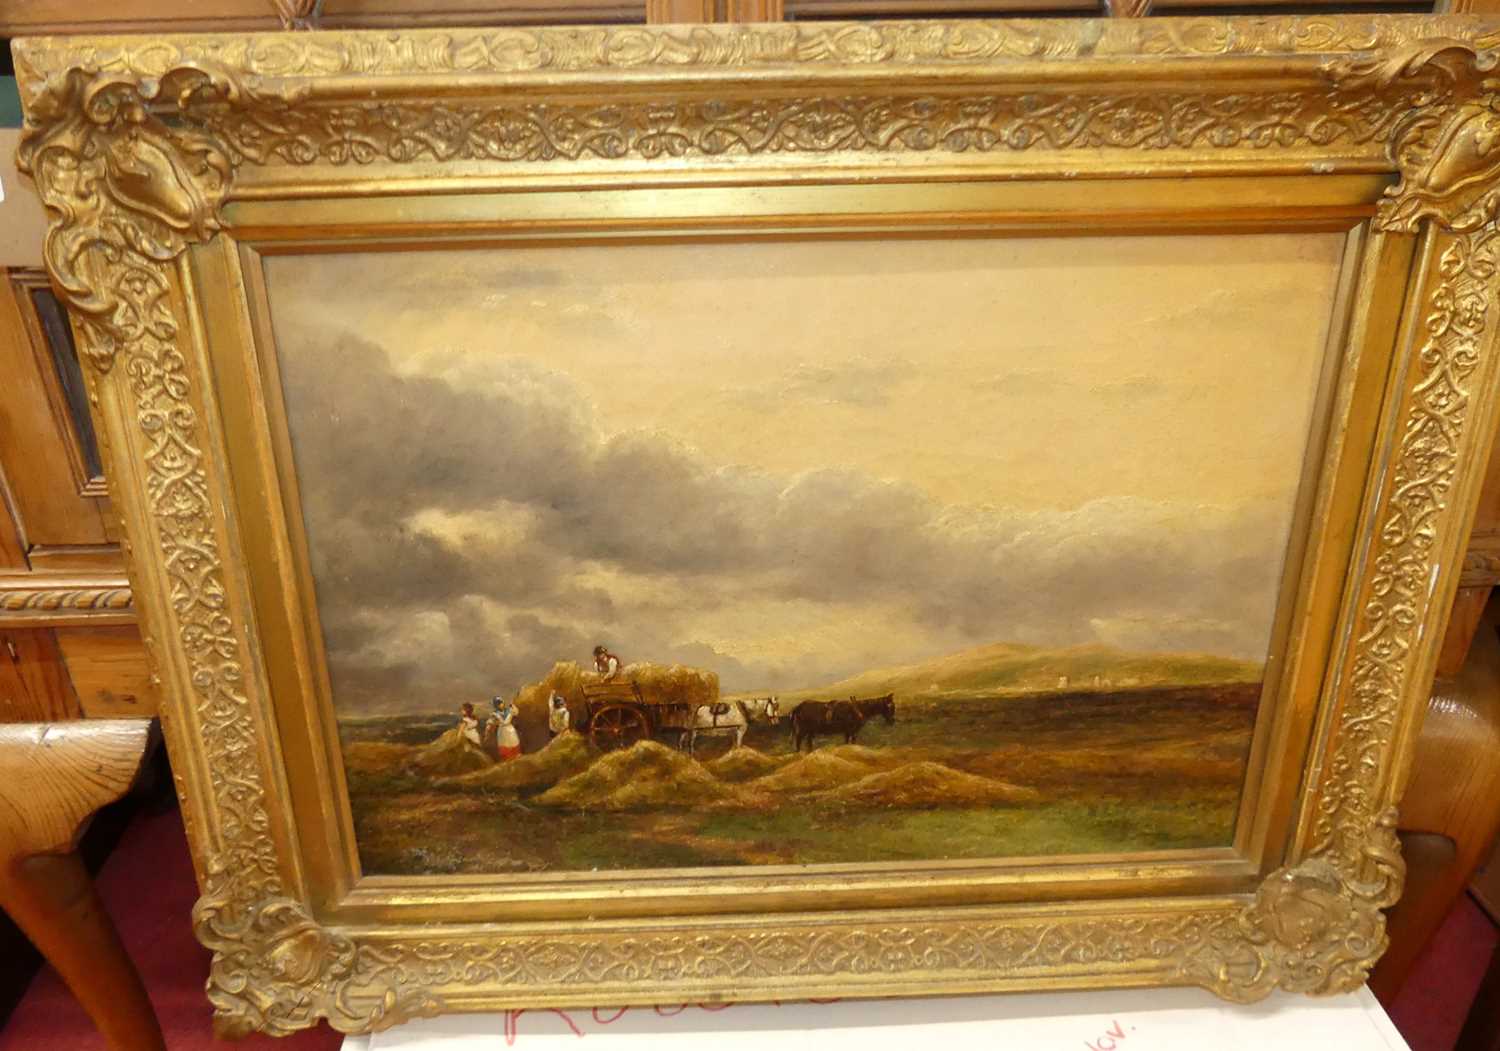 19th century English school - Loading the haycart under heavy skies, oil on canvas, 35 x 51cm